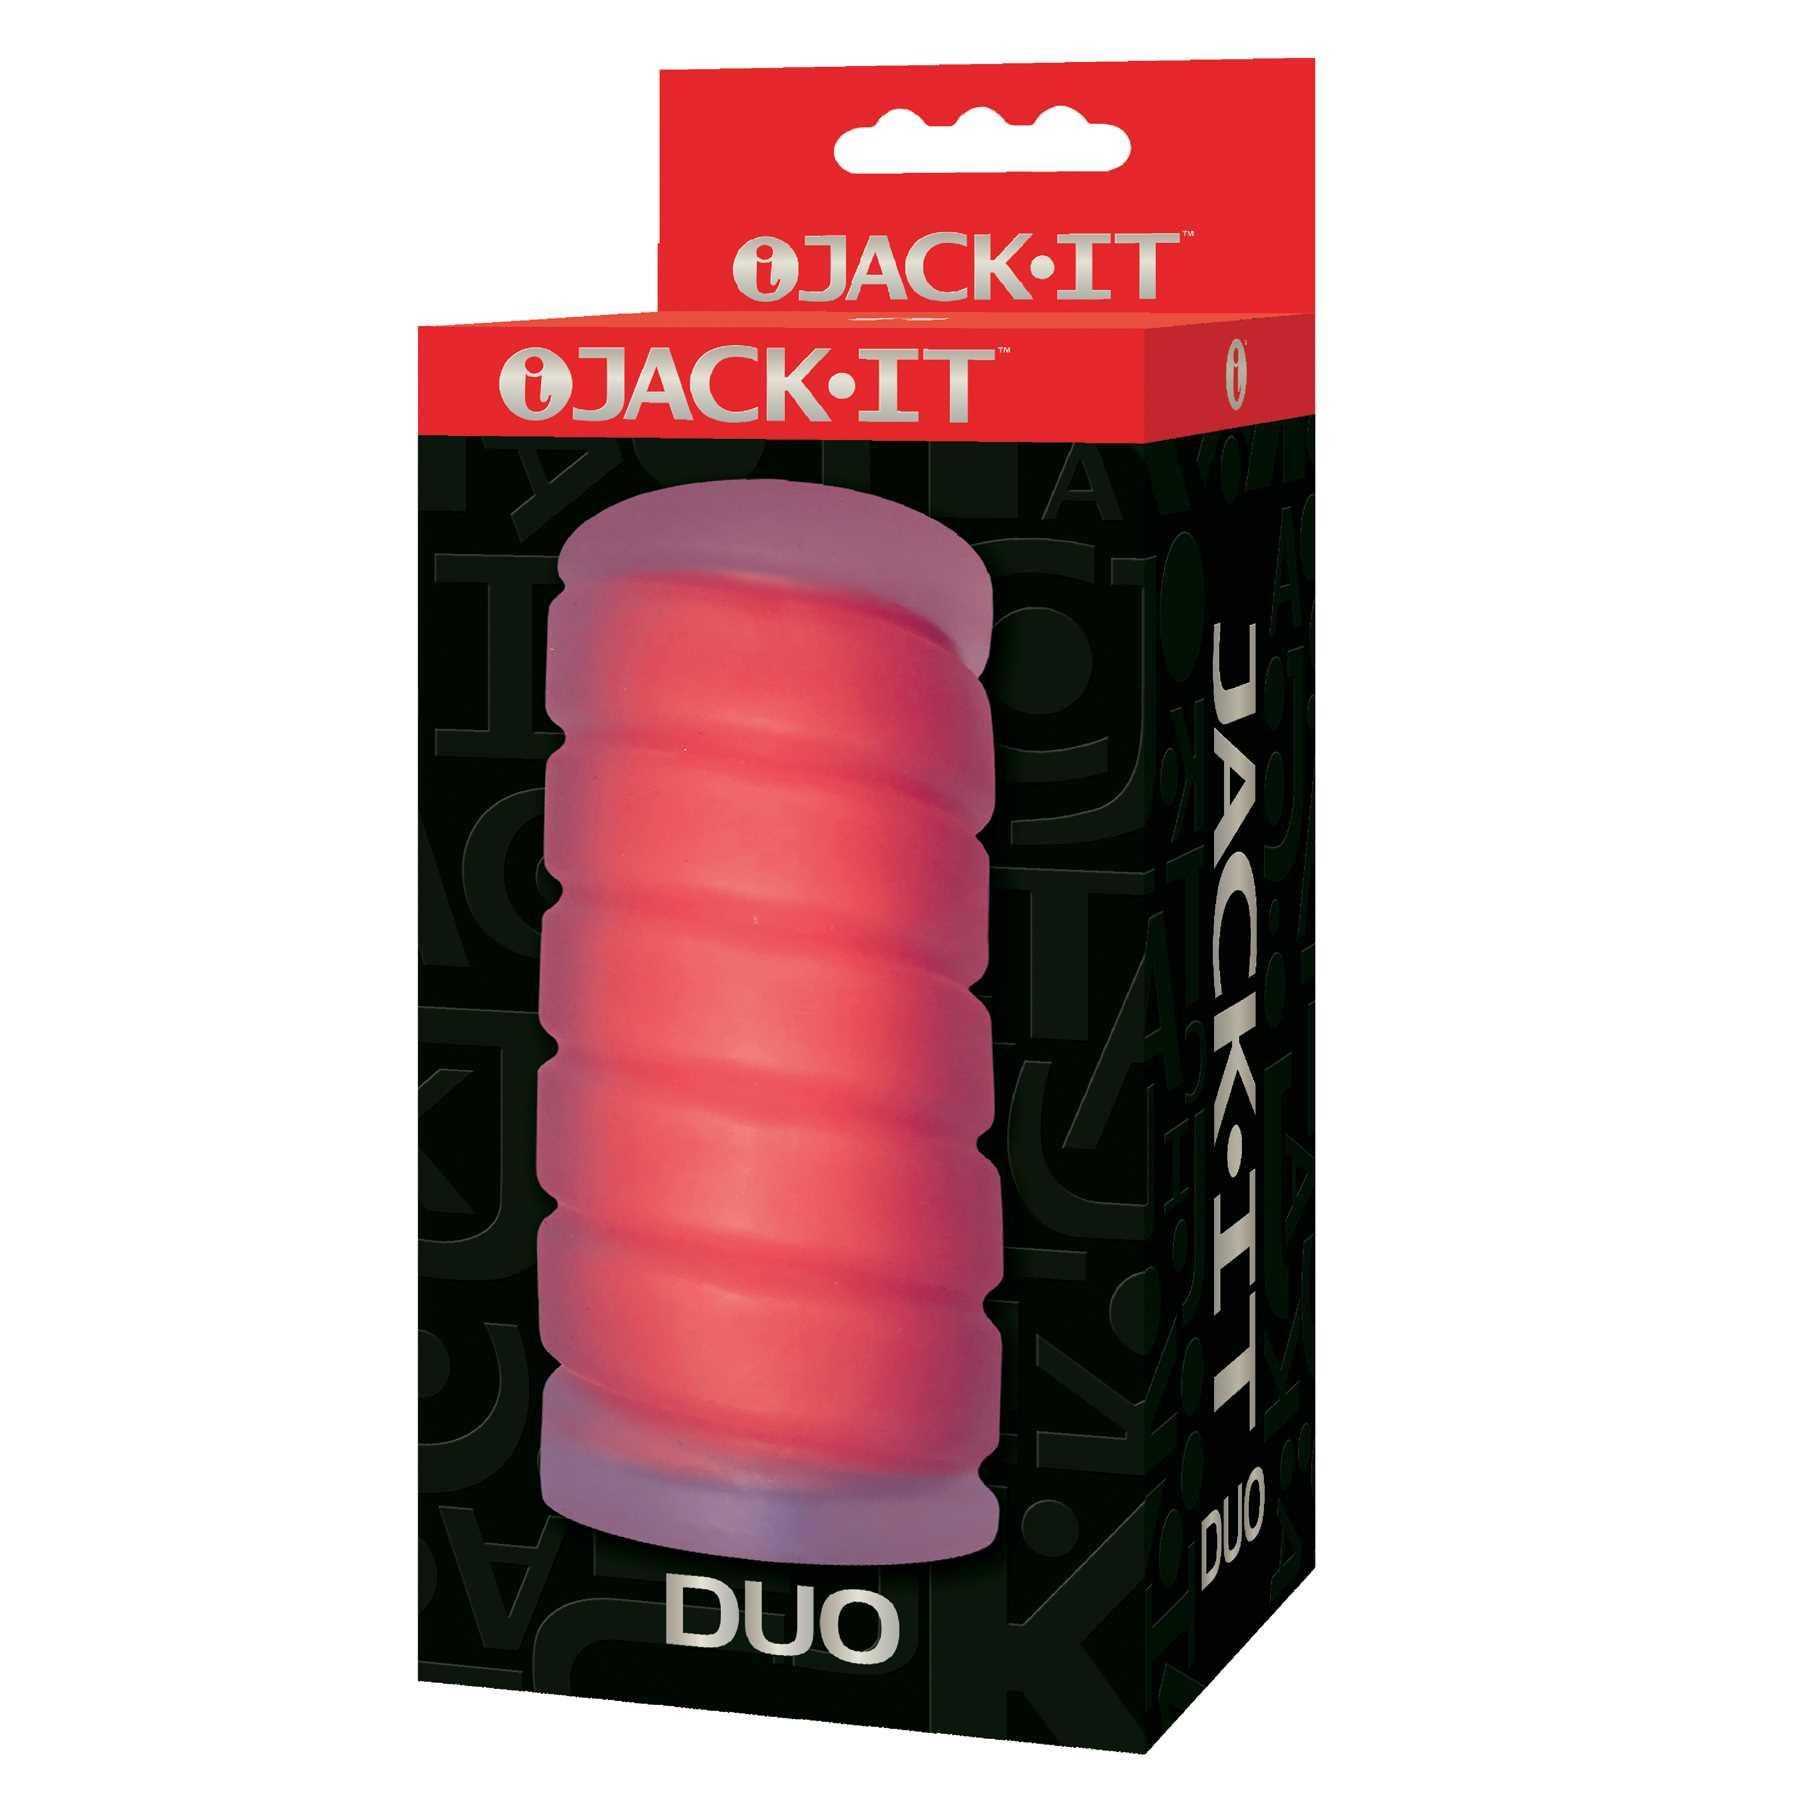 Jack-It Duo Stroker male masturbator red packaging